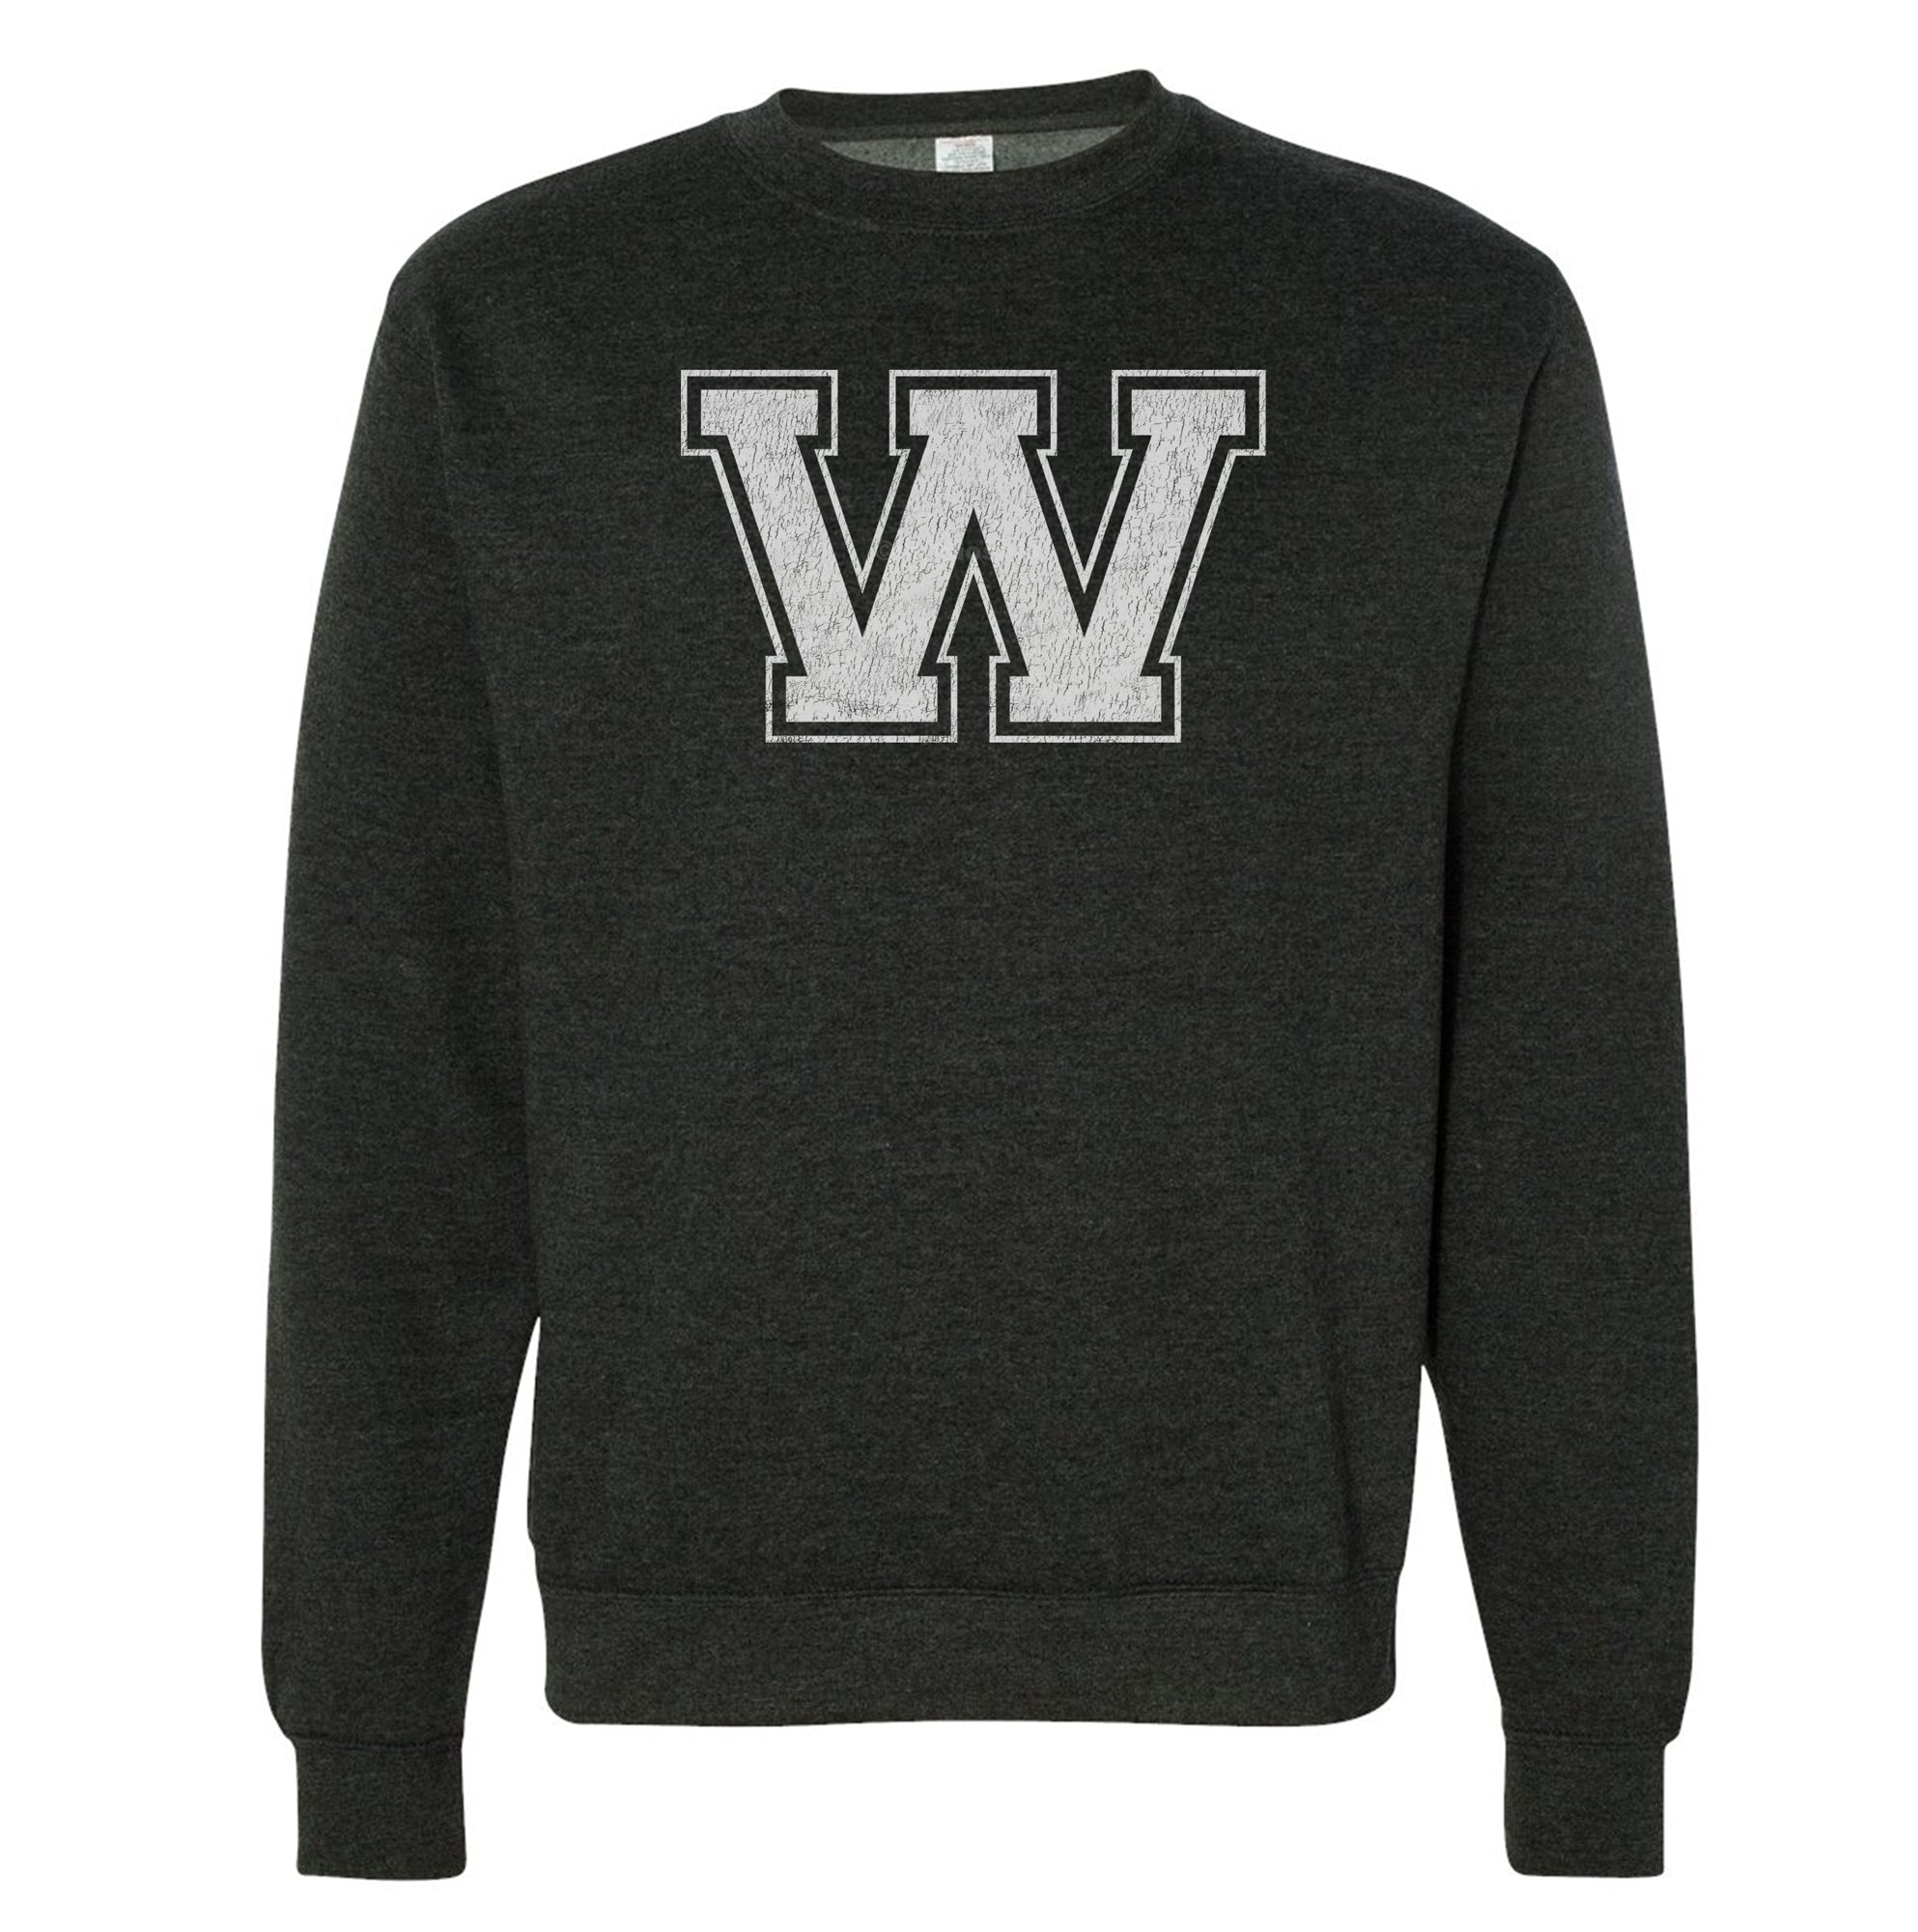 "W" Vintage Adult Sweater